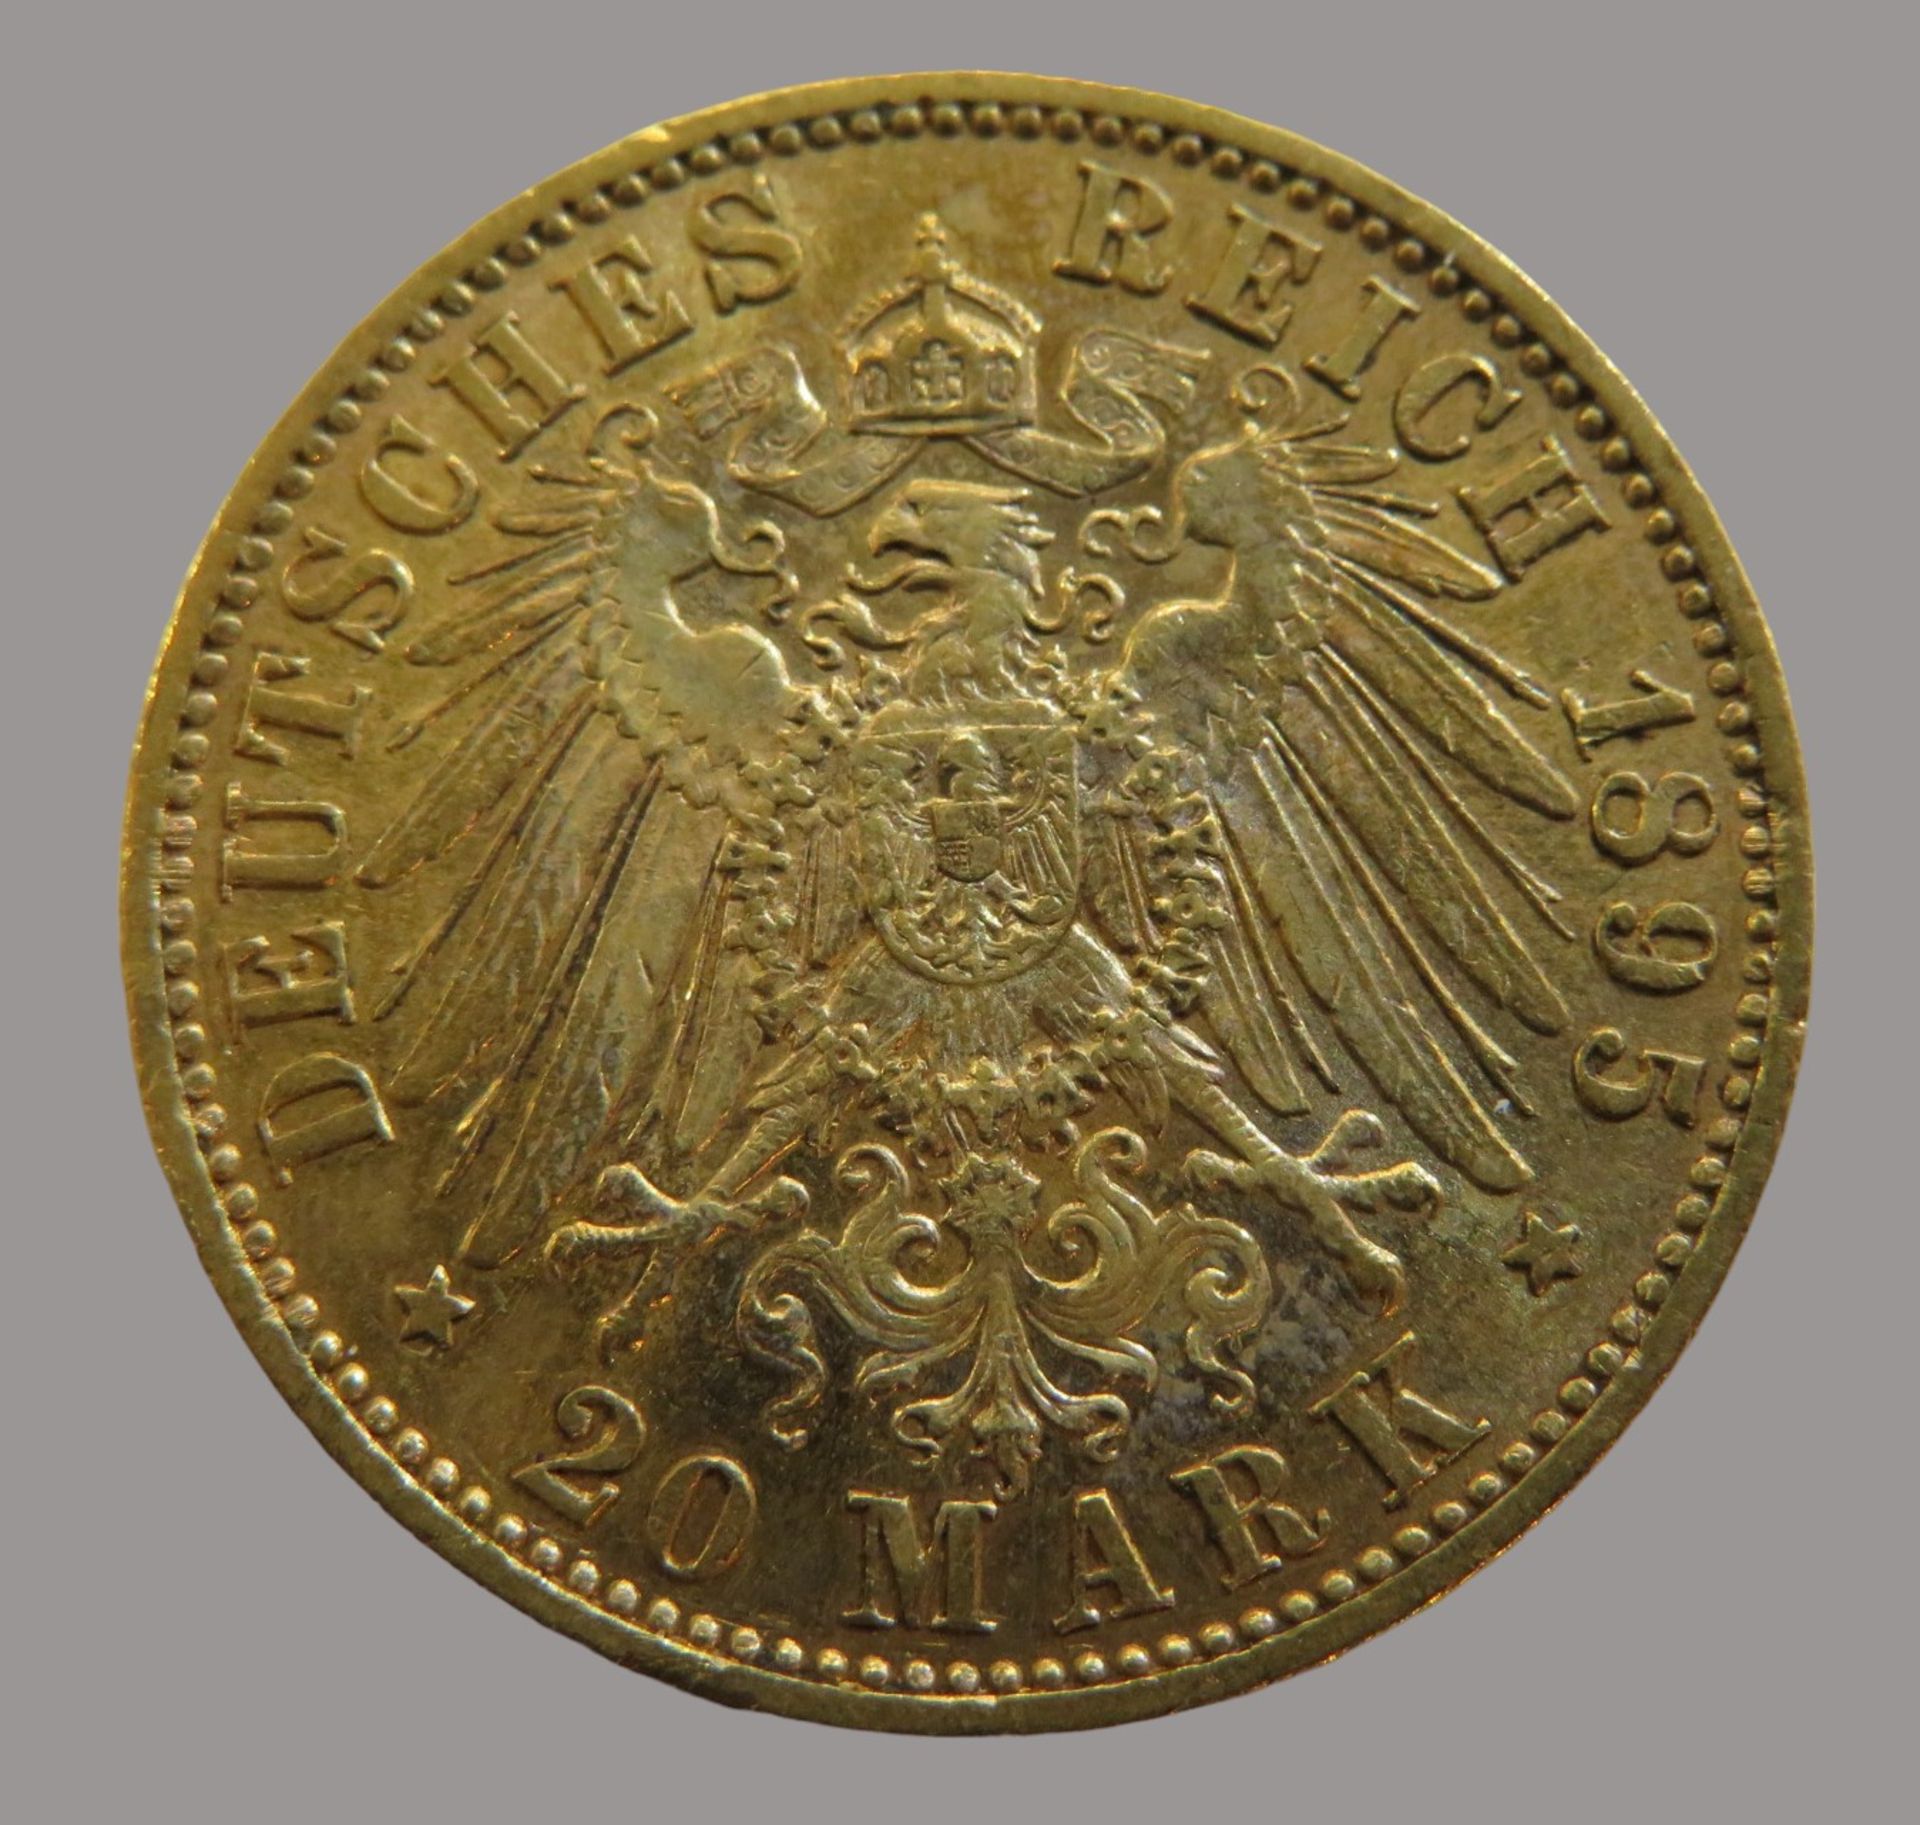 Goldmünze, 20 Mark, Albert von Sachsen, 1895E, Gold 900/000, 7,96 g, J 264, Erhaltungszustand SS, d - Image 2 of 2